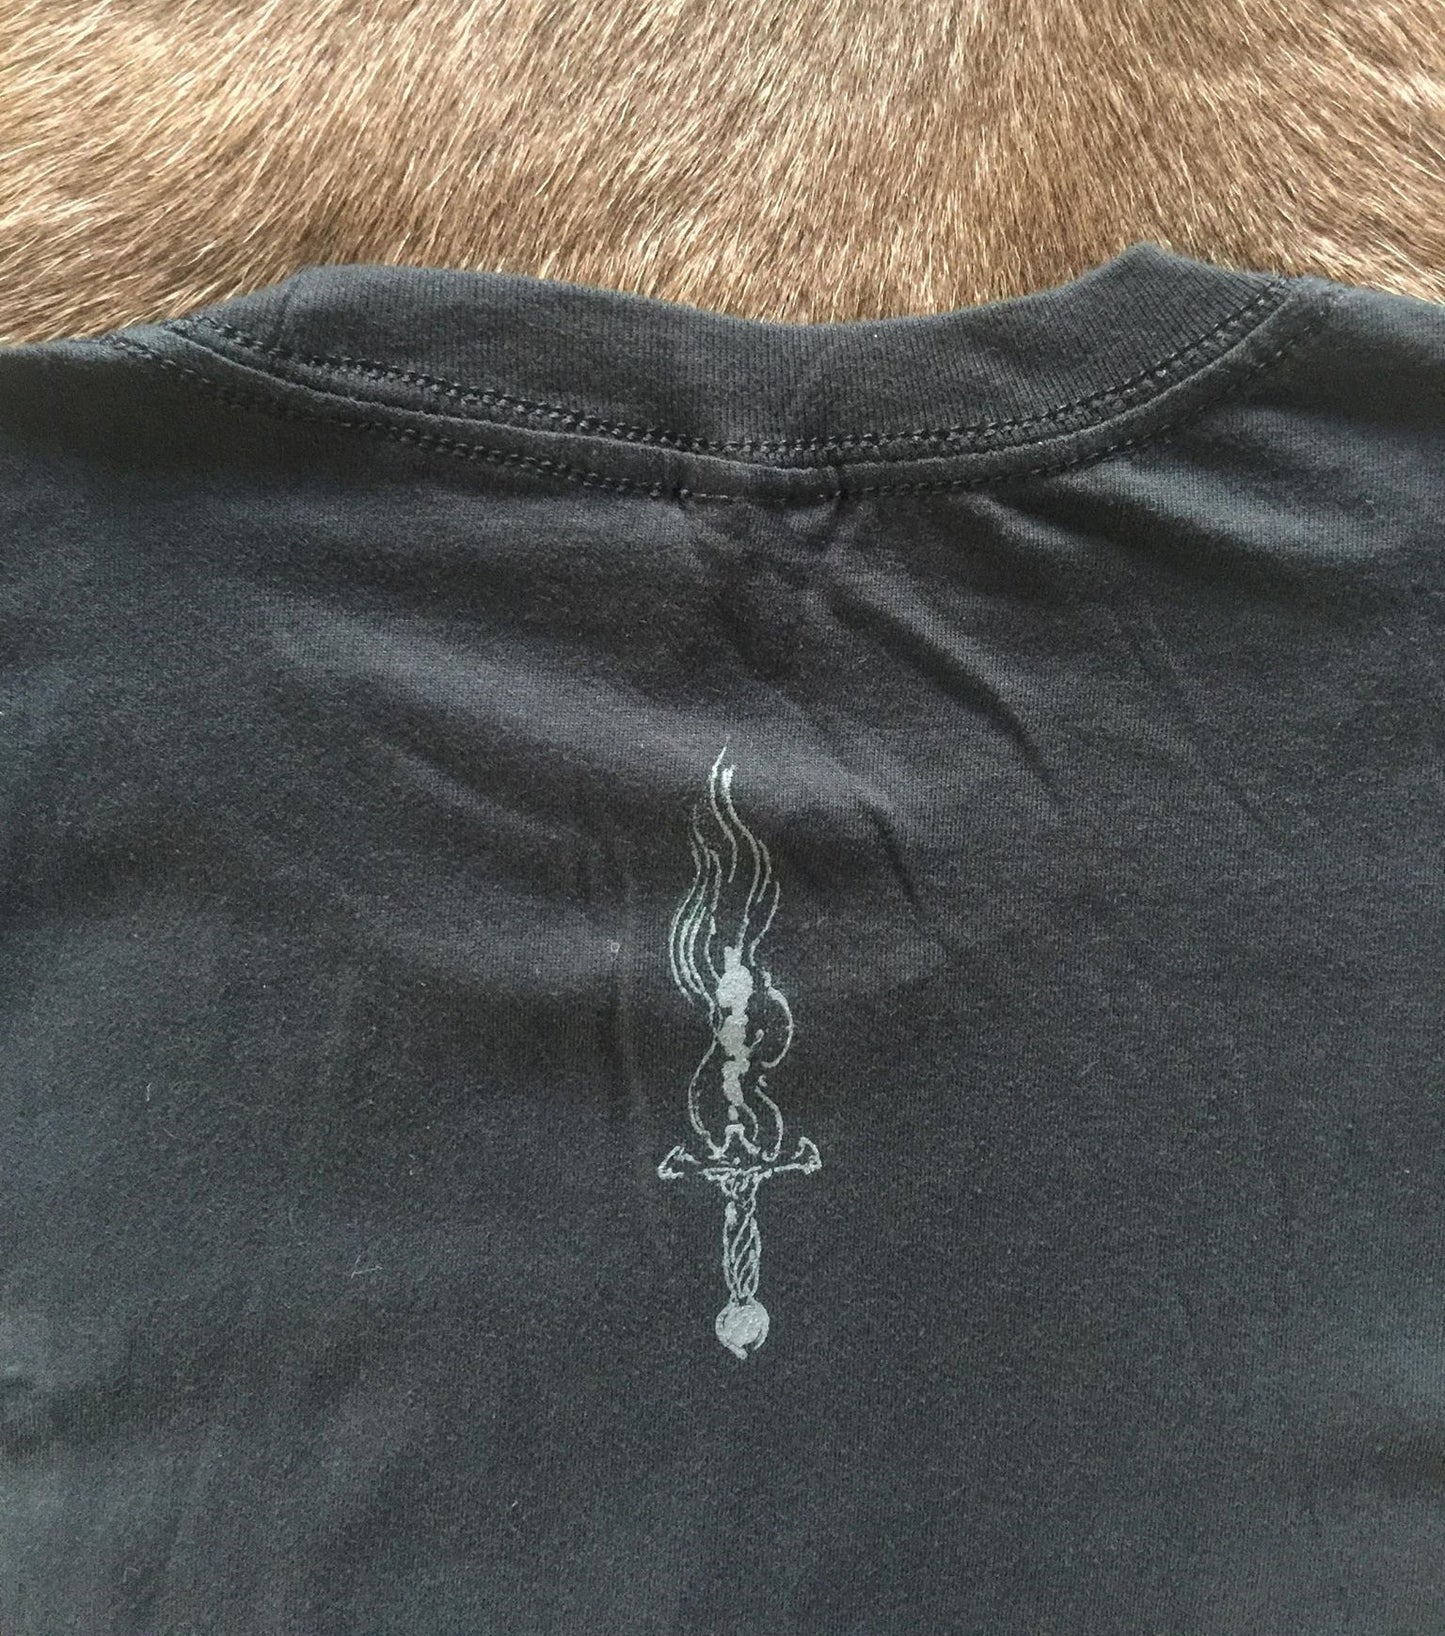 Behemoth - Furor Divinus Short Sleeved T-shirt